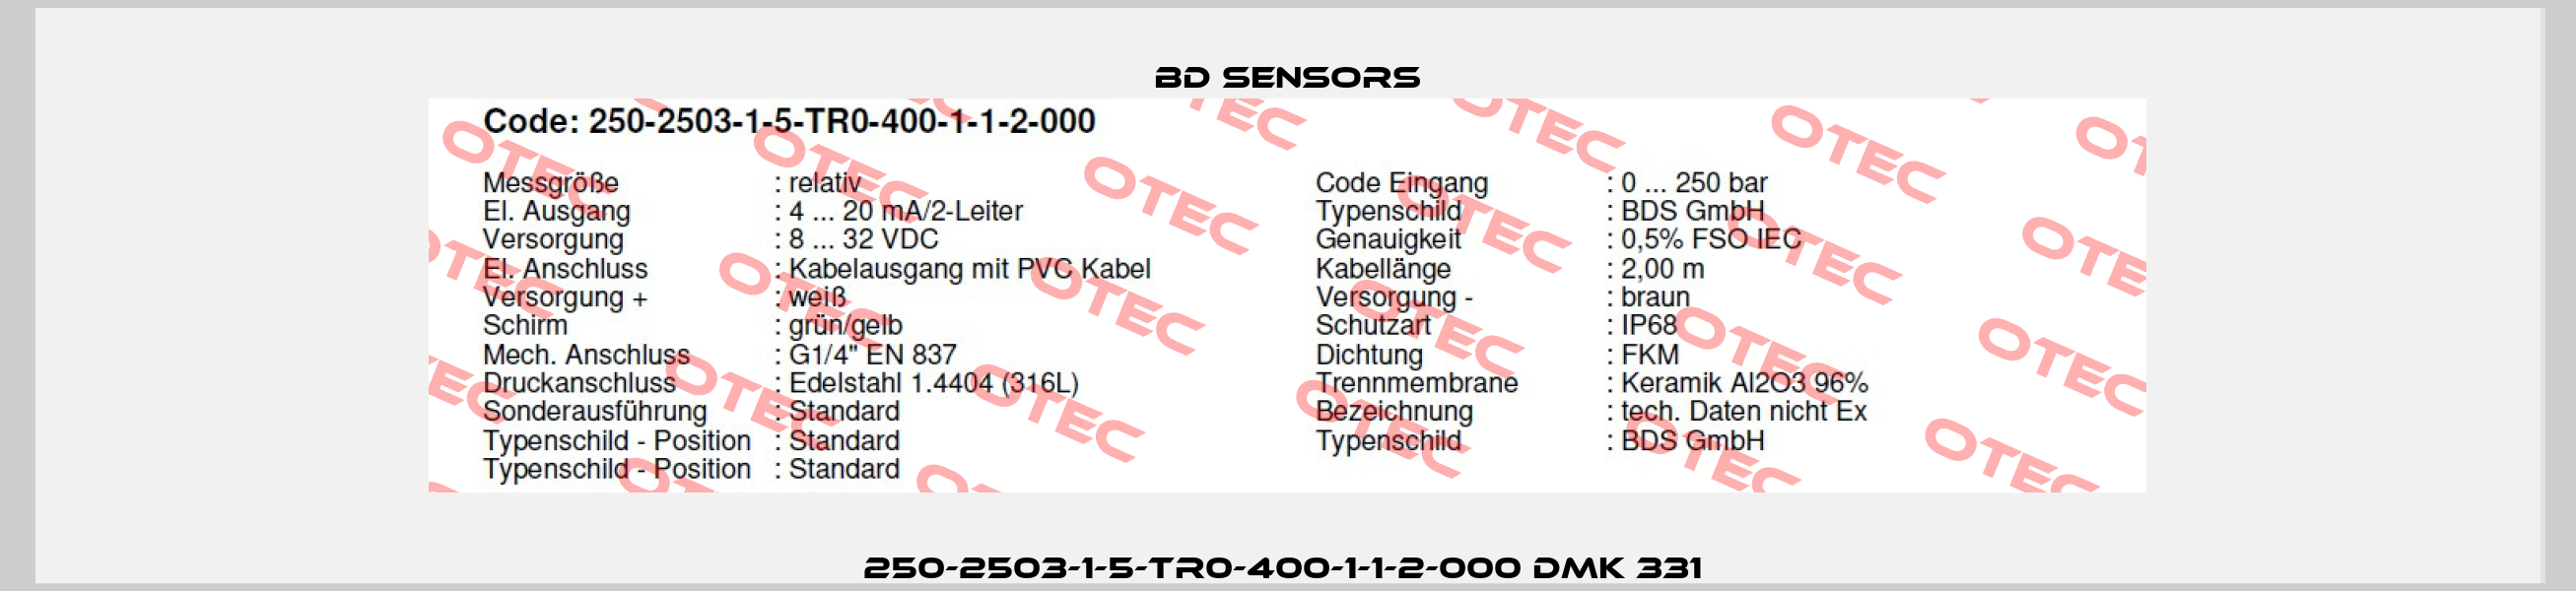 250-2503-1-5-TR0-400-1-1-2-000 DMK 331  Bd Sensors